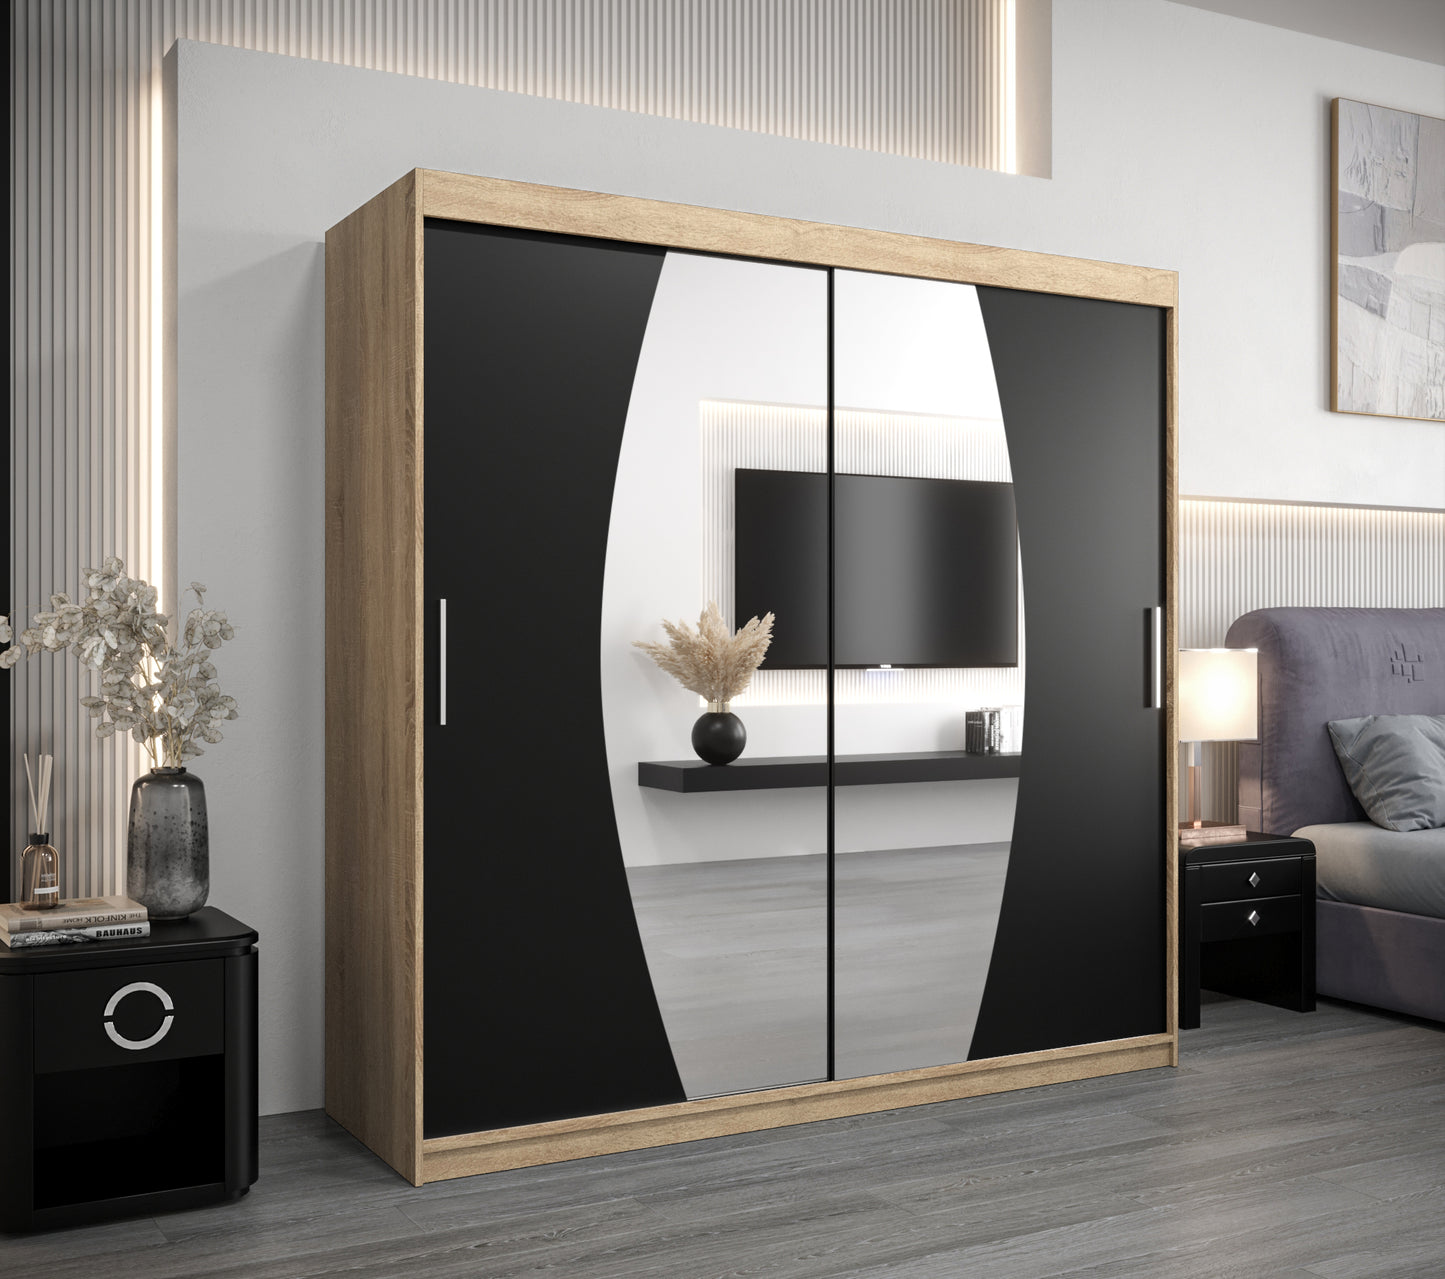 ECLIPTO - Wardrobe Sliding Doors Mirrors Colour Combinations Drawers Optional >200cm x 200cm<